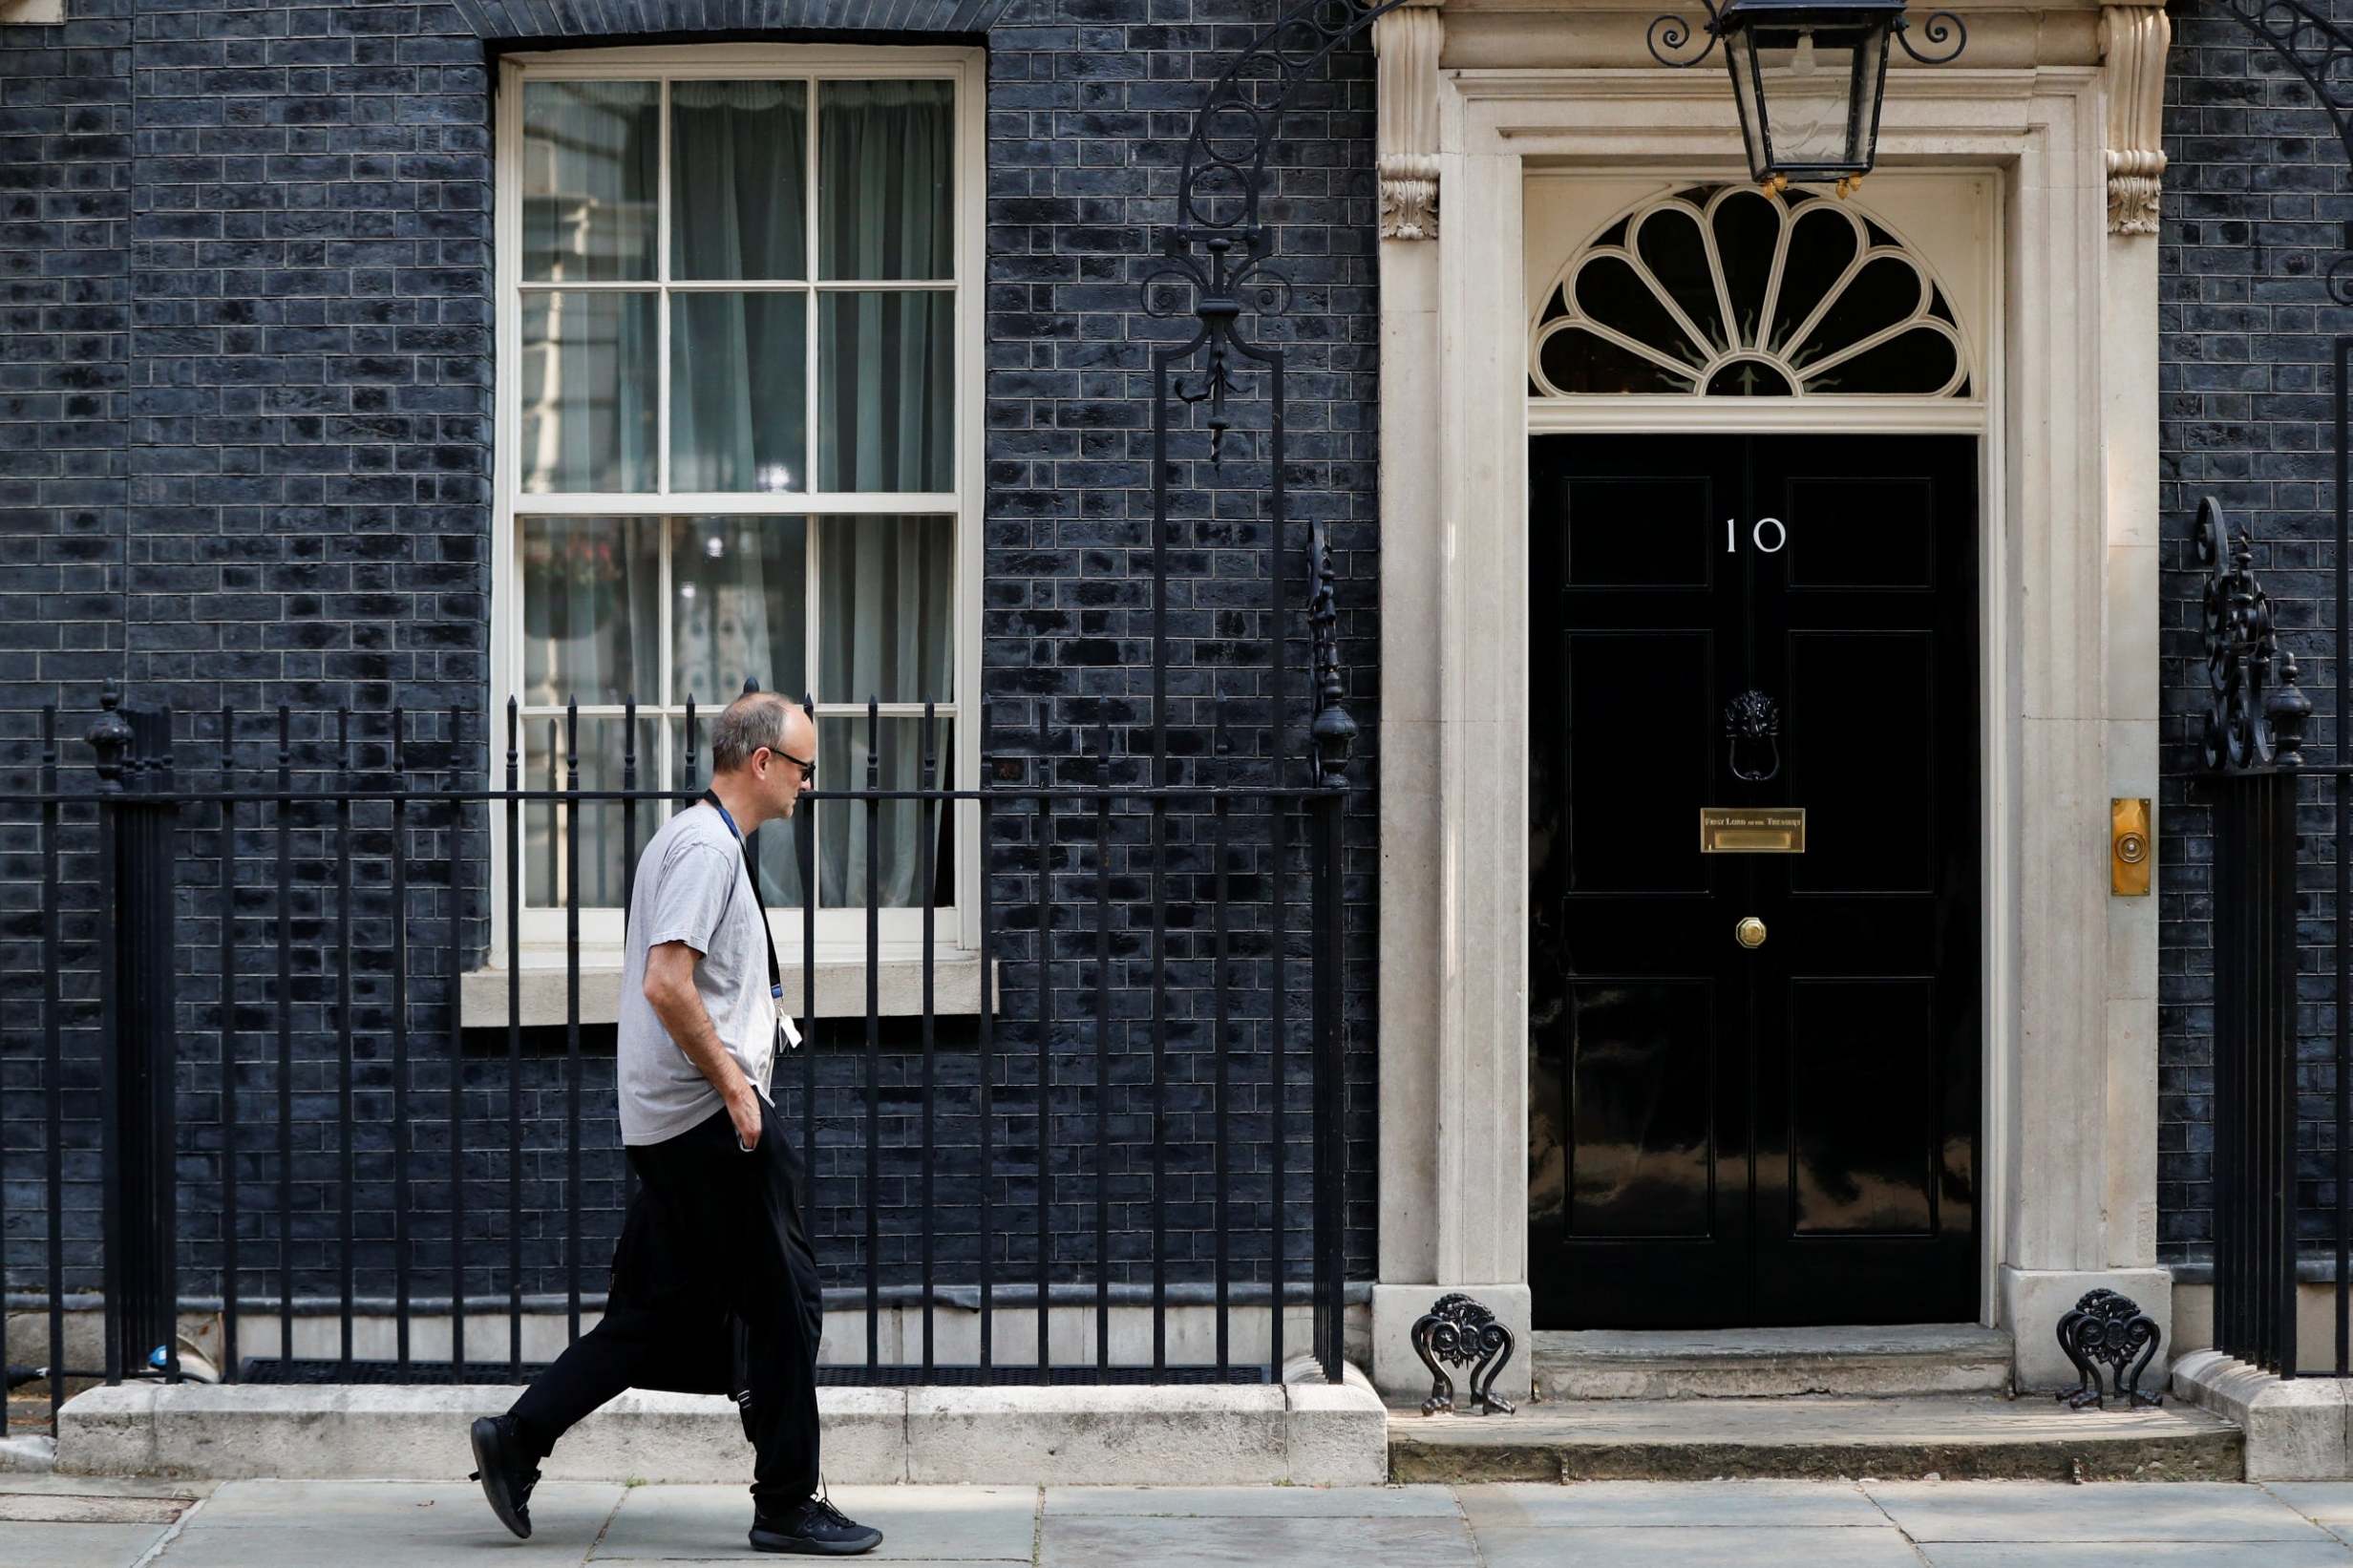 Boris Johnson’s chief adviser has set up a new ‘mission control’ office next door to No 10